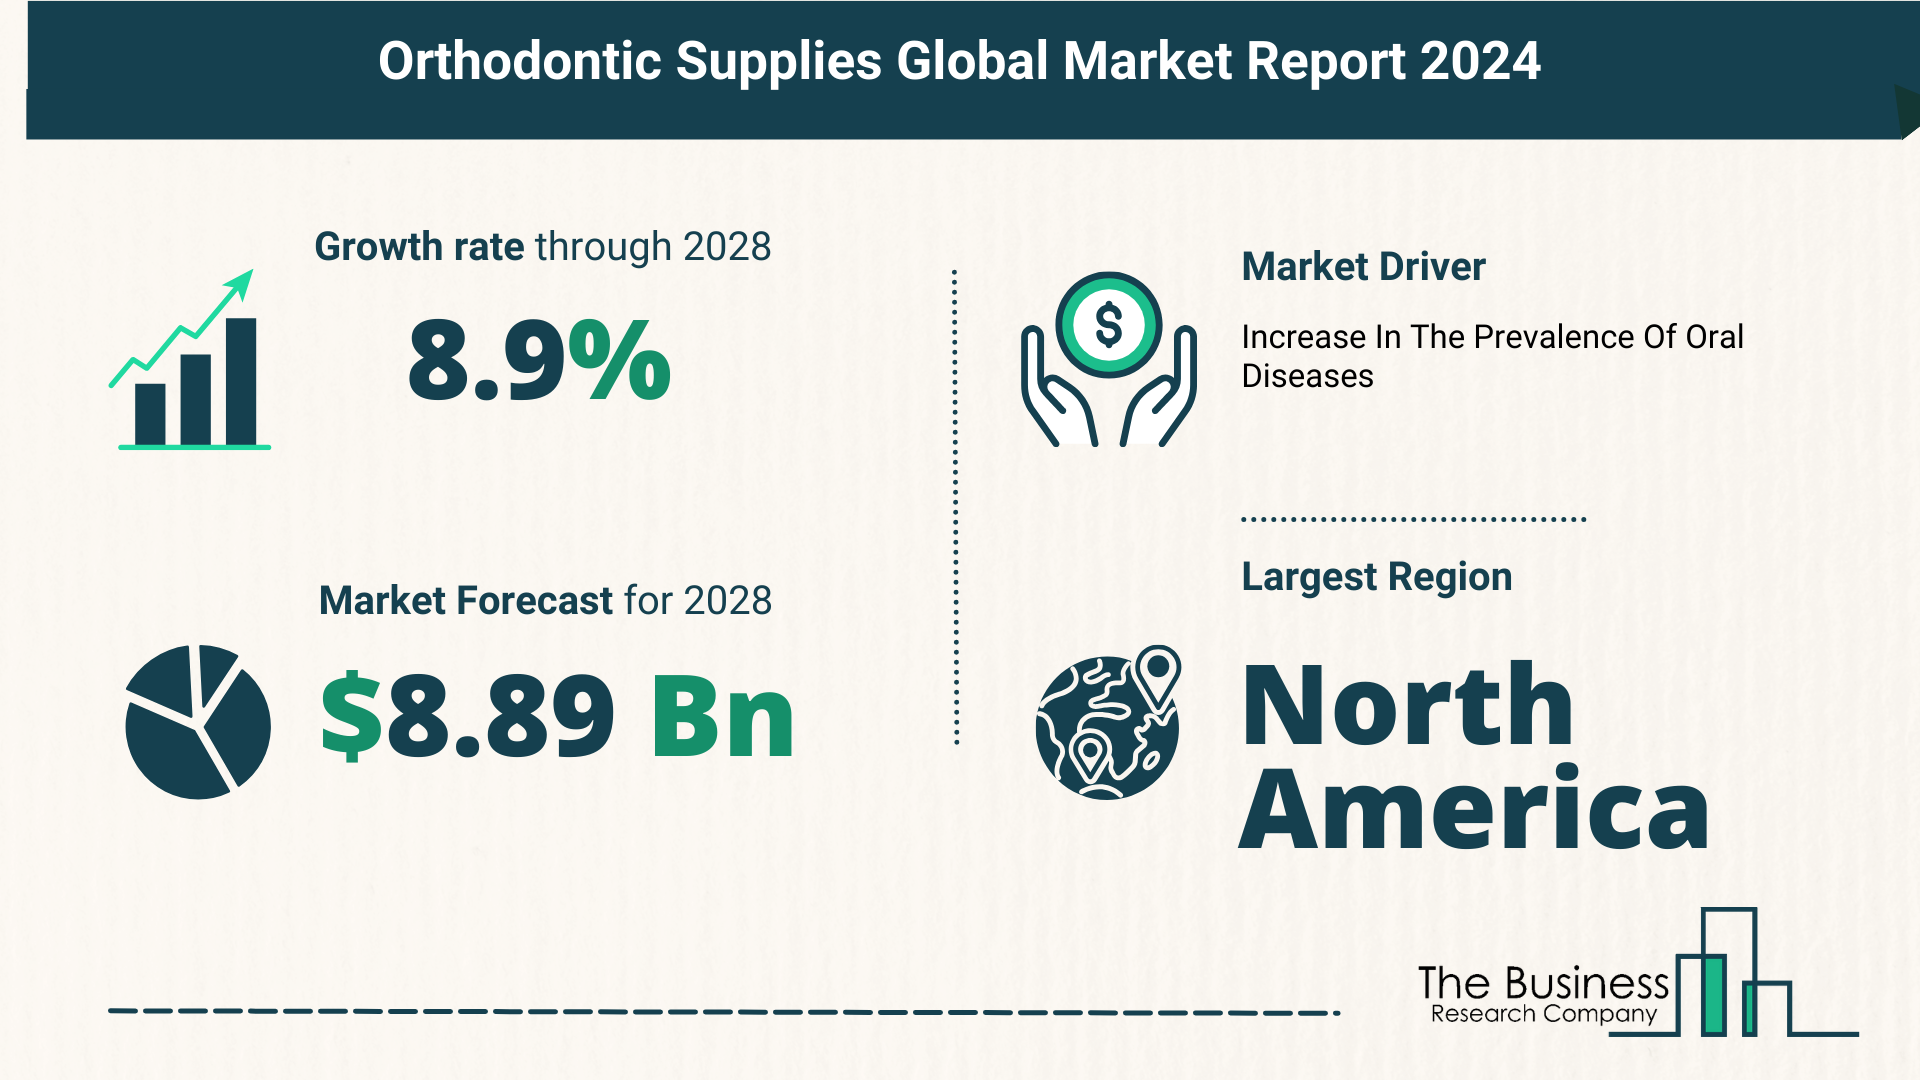 Global Orthodontic Supplies Market